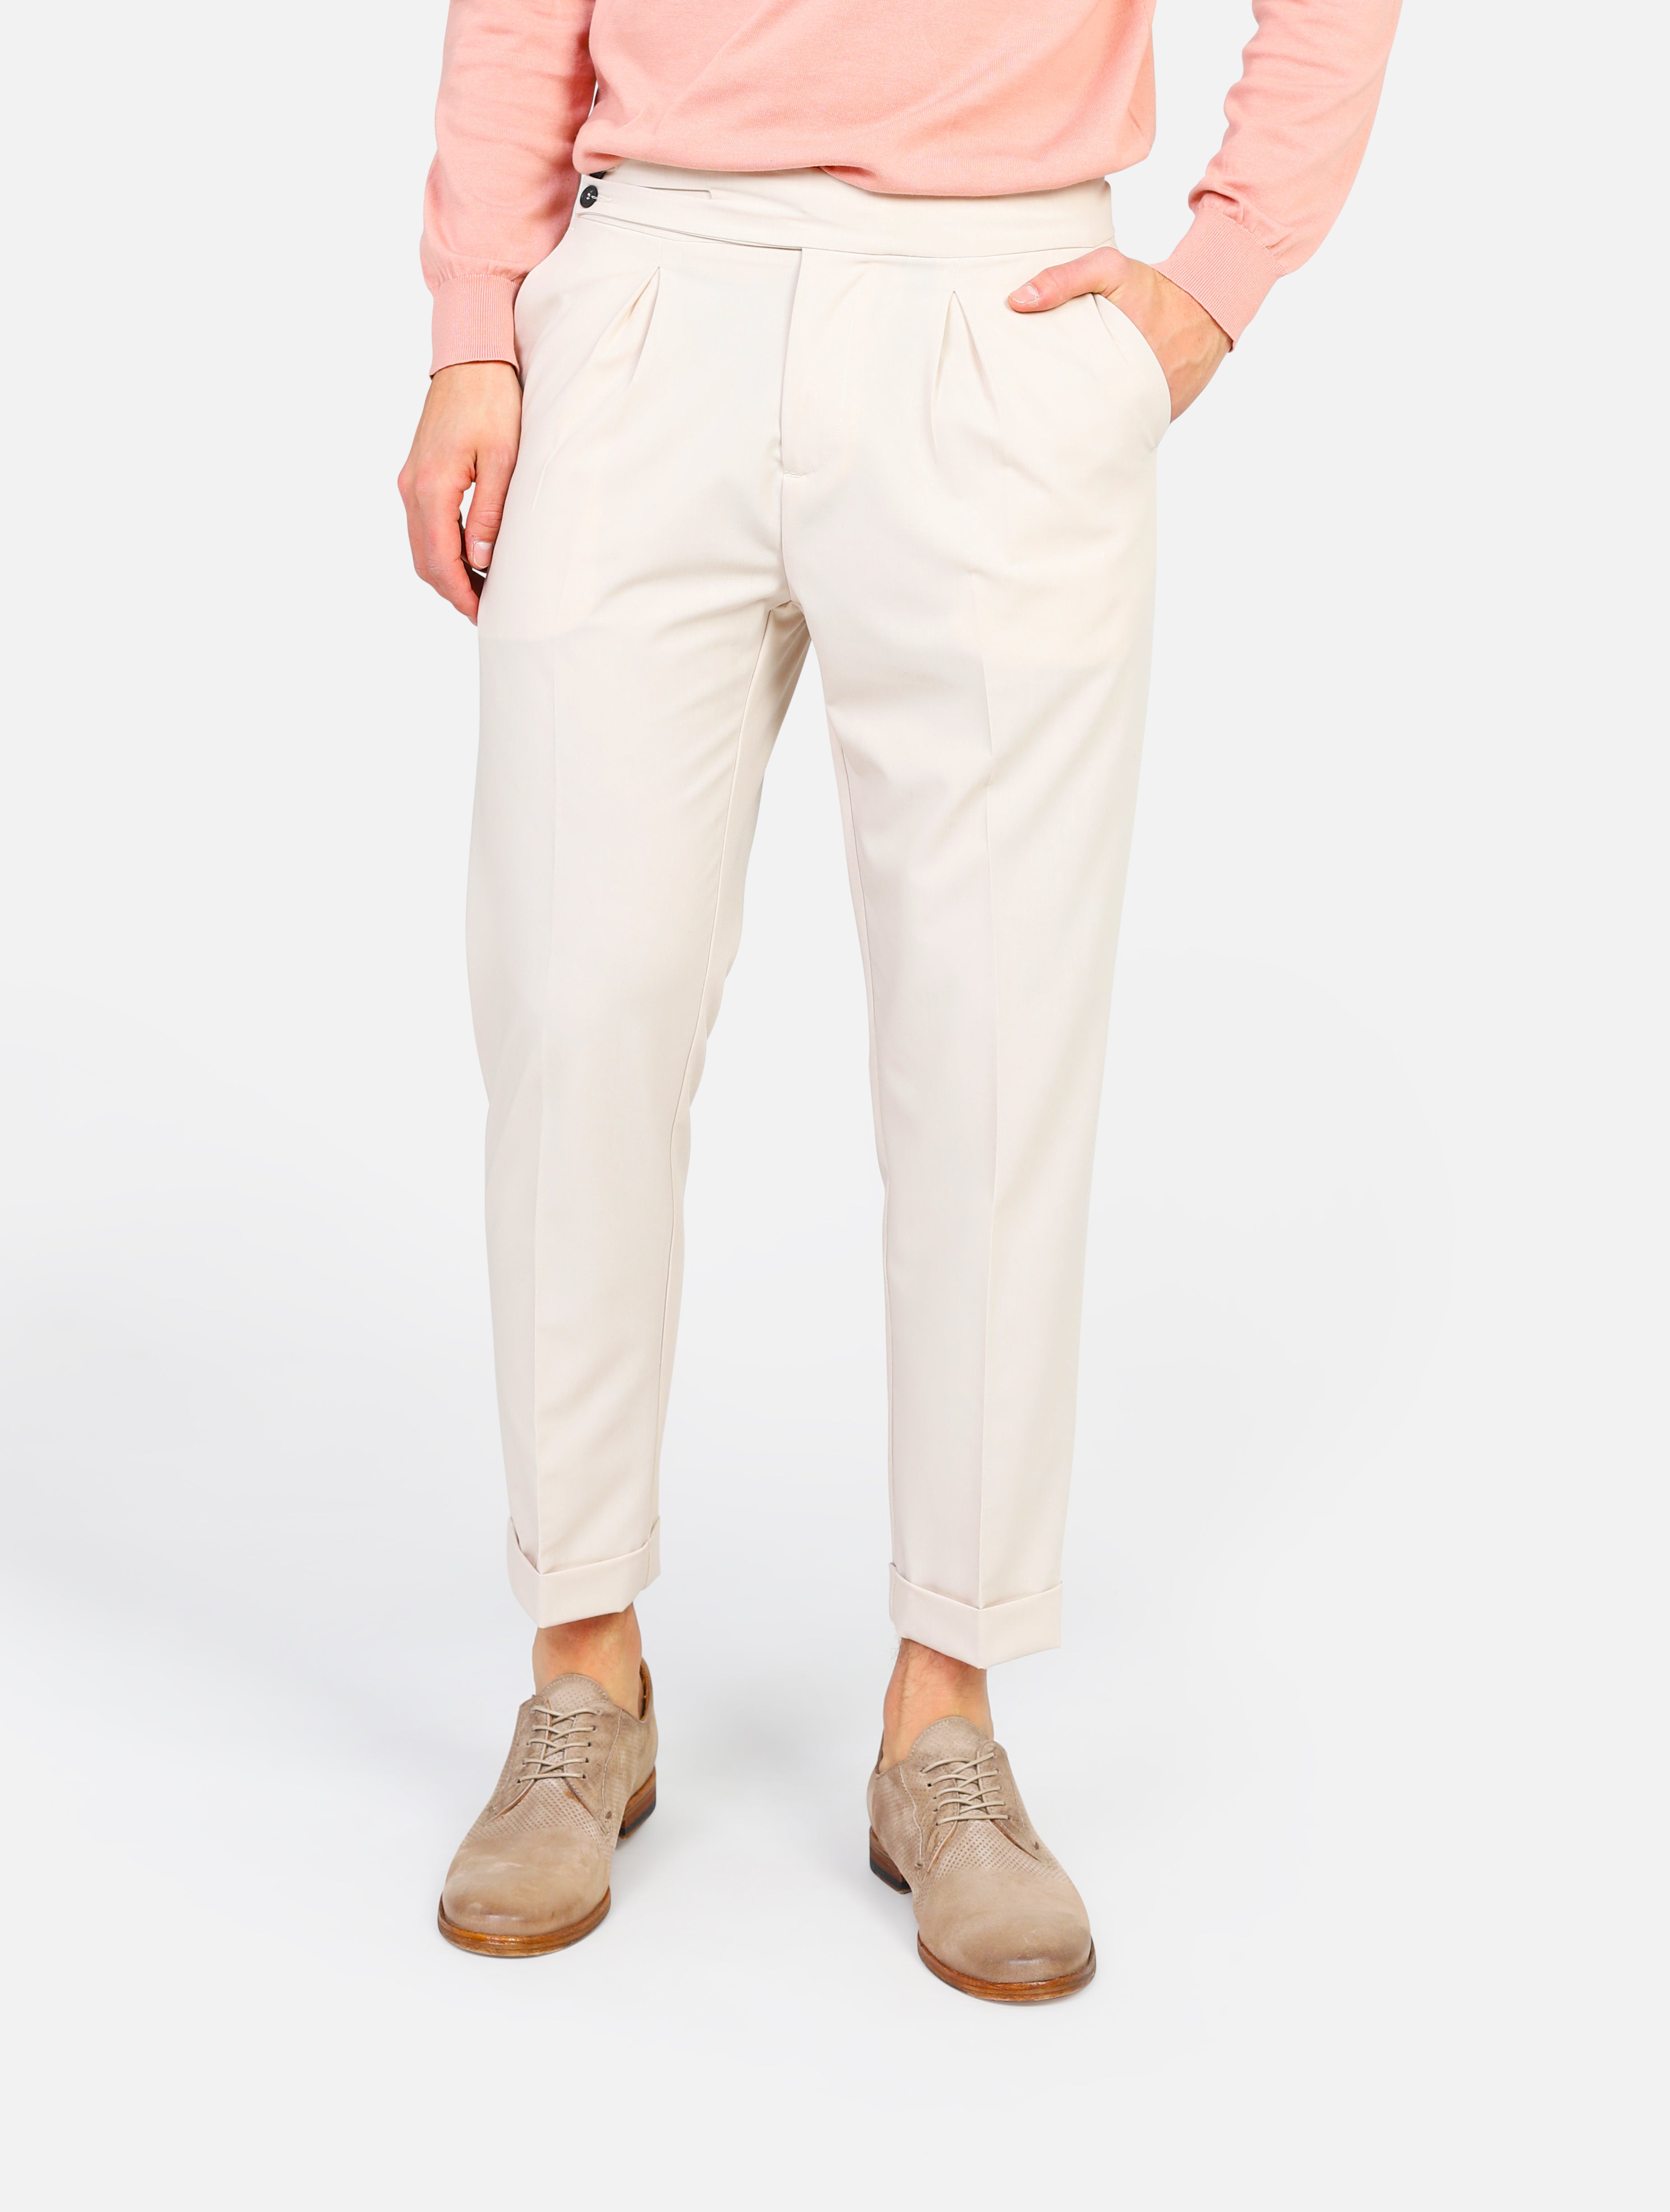 Pantalone why not brand -  beige man  - 1